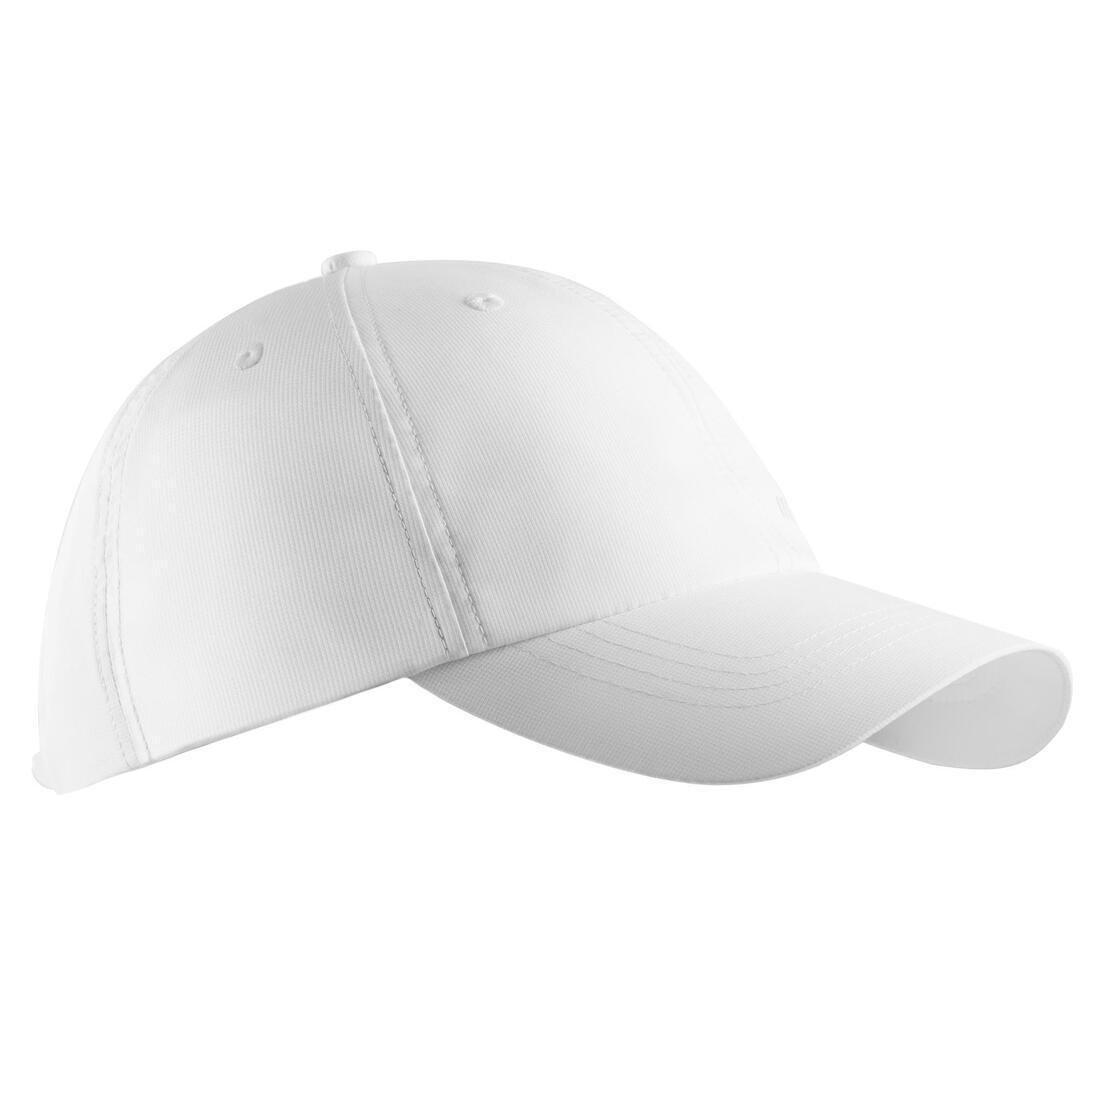 INESIS - Adult's golf cap WW100, Asphalt blue